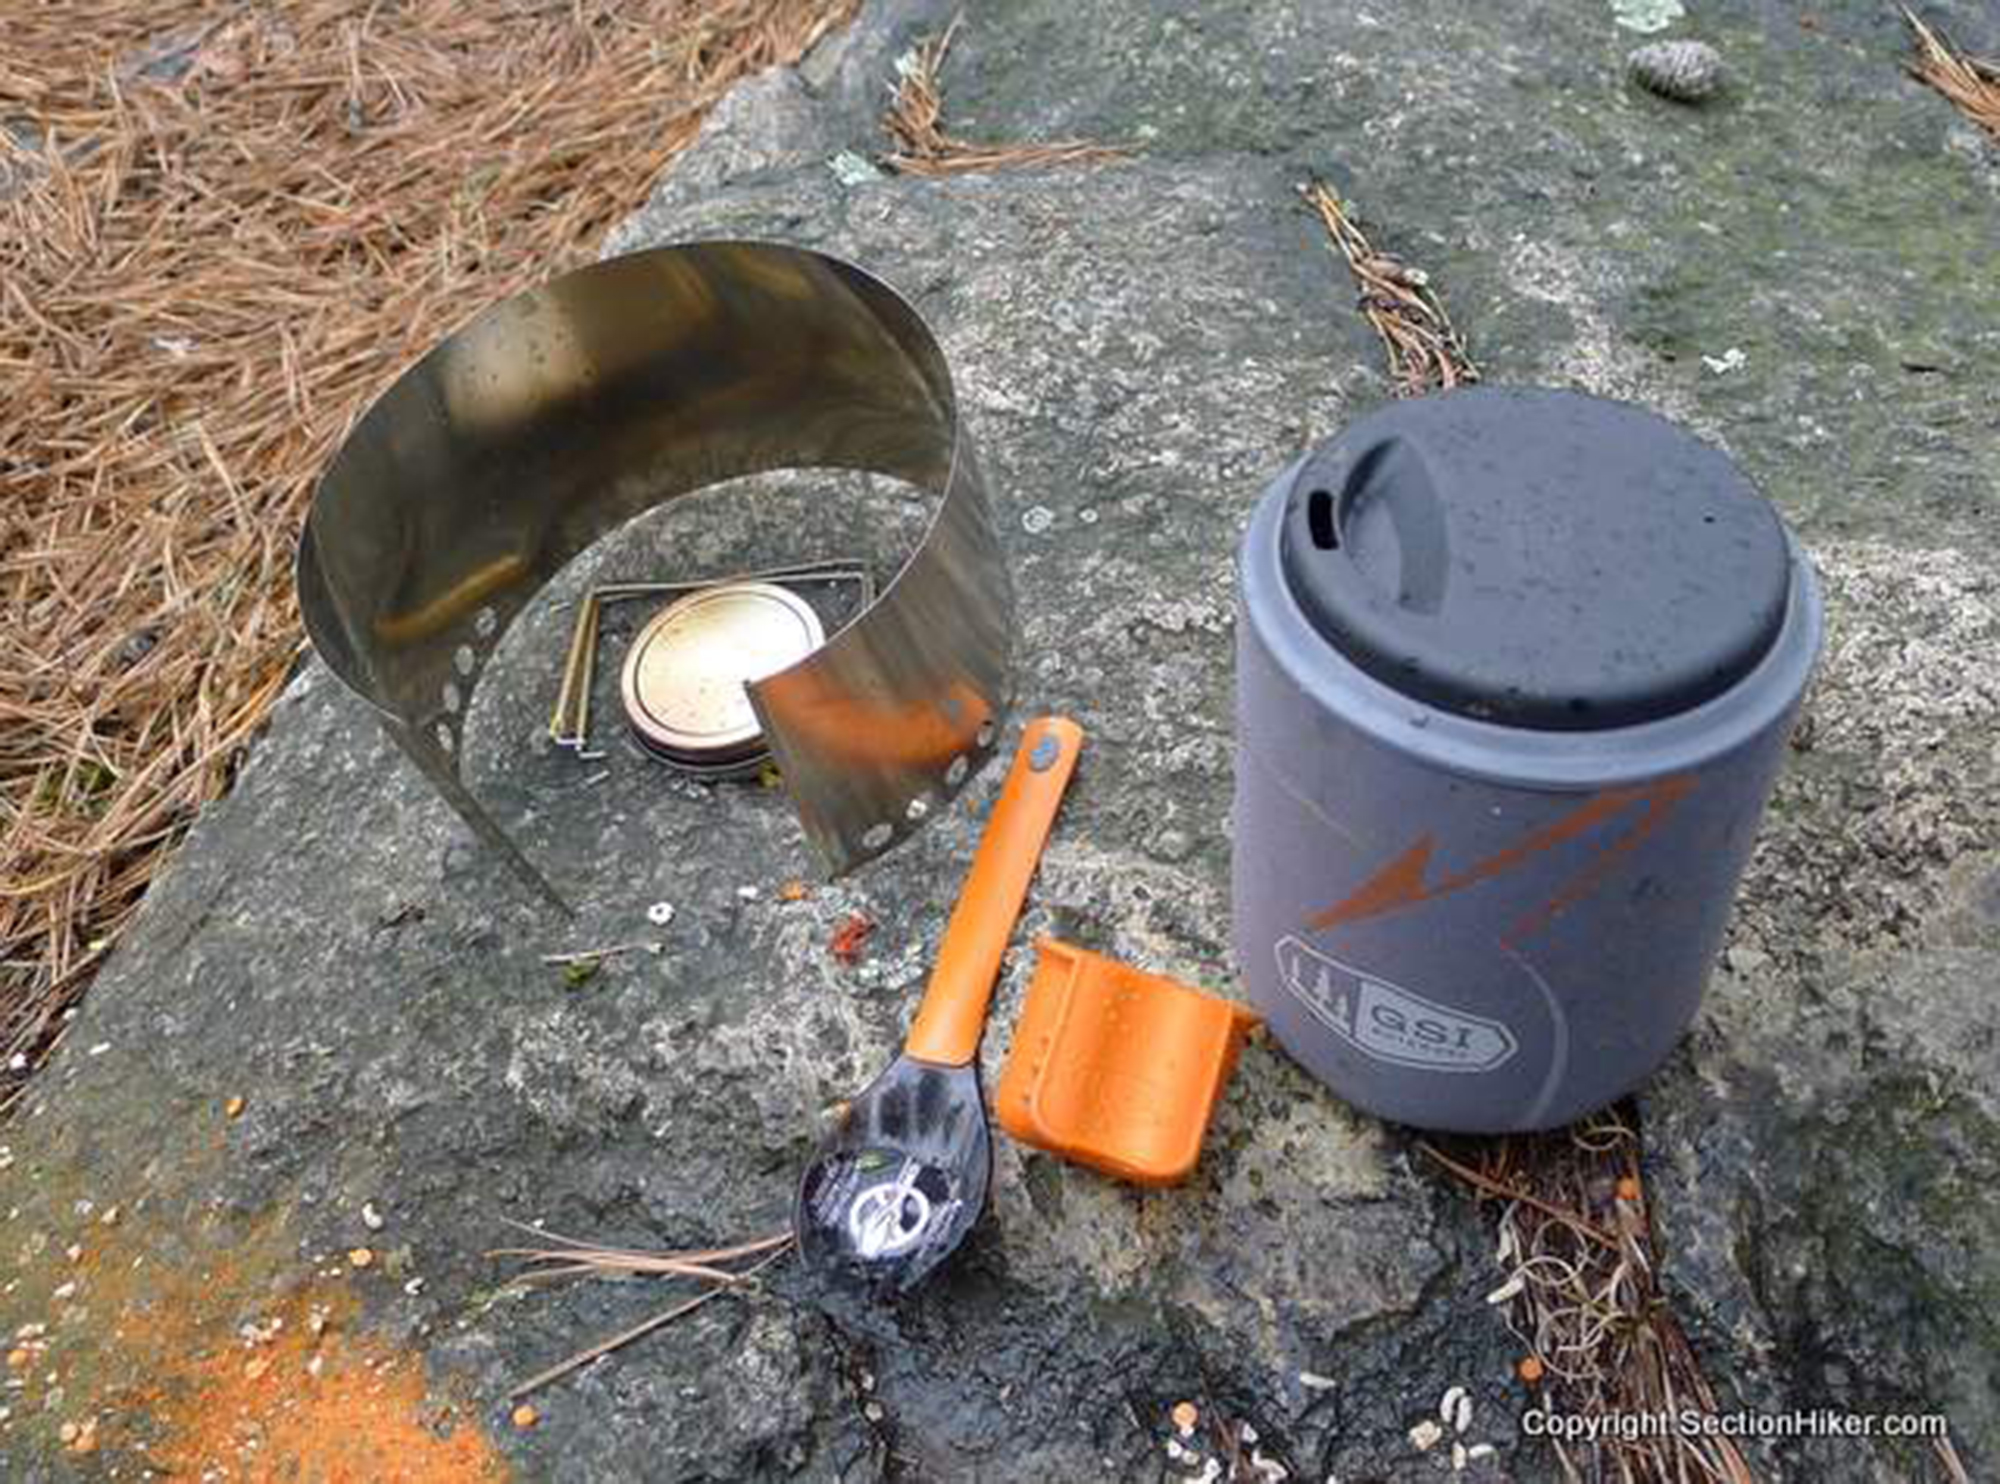 GSI Outdoors Halulite Minimalist Camping Cookware Set